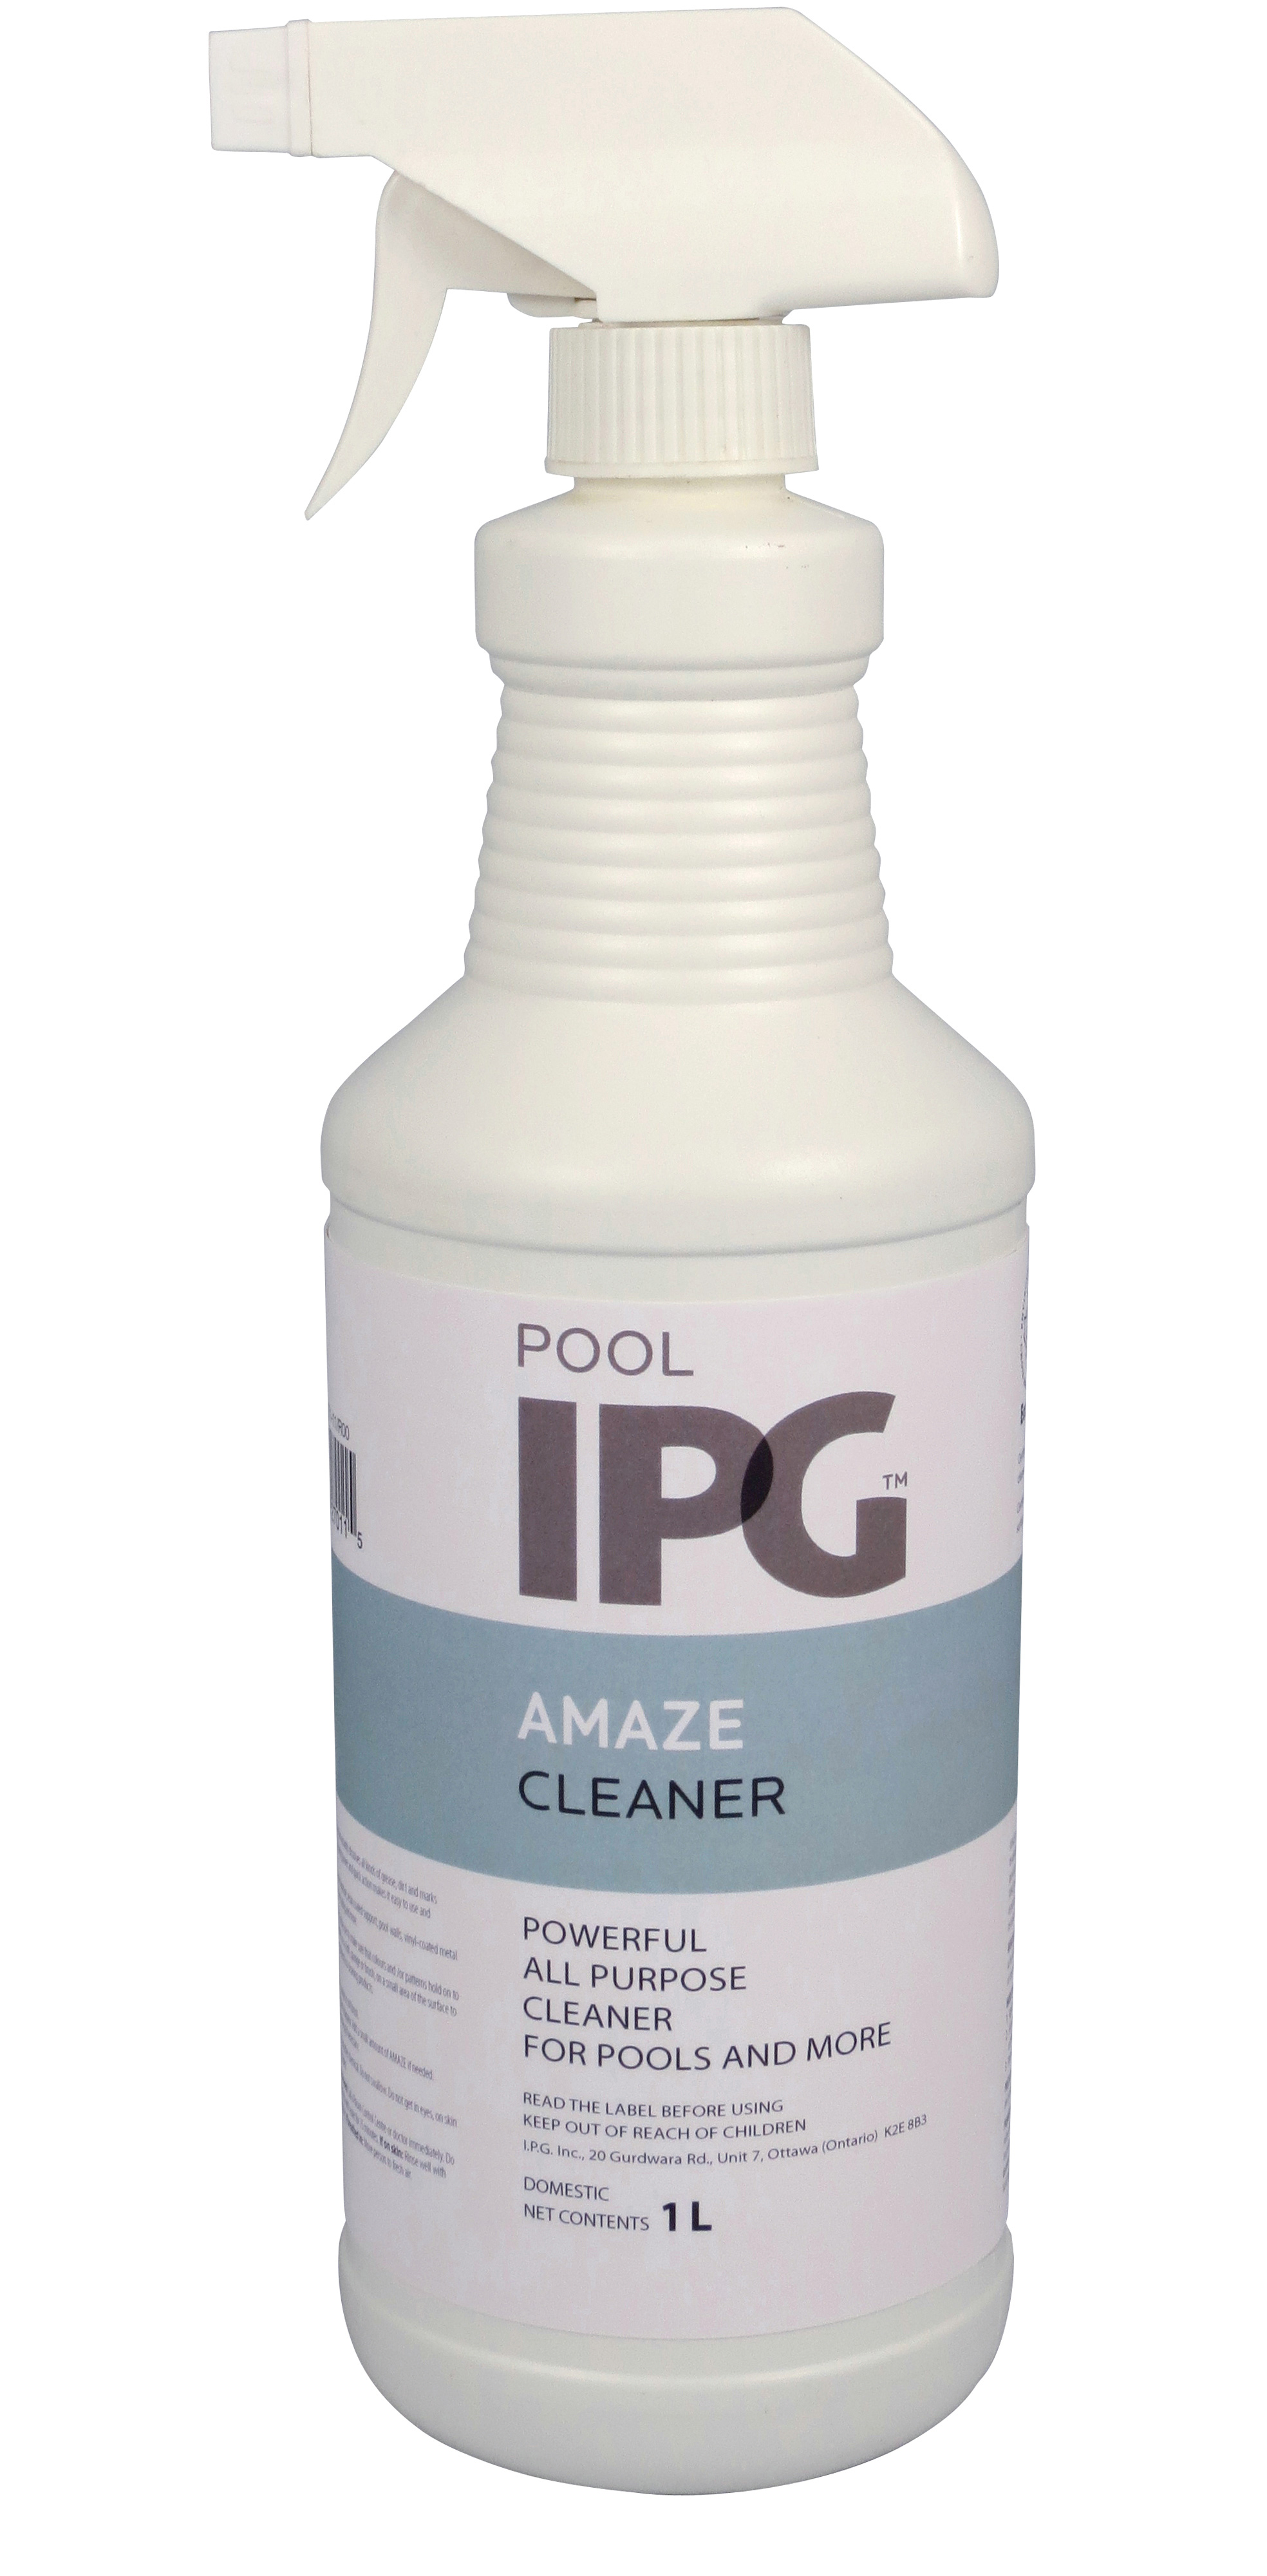 Amaze cleaner multi-purpose pool cleaner solution